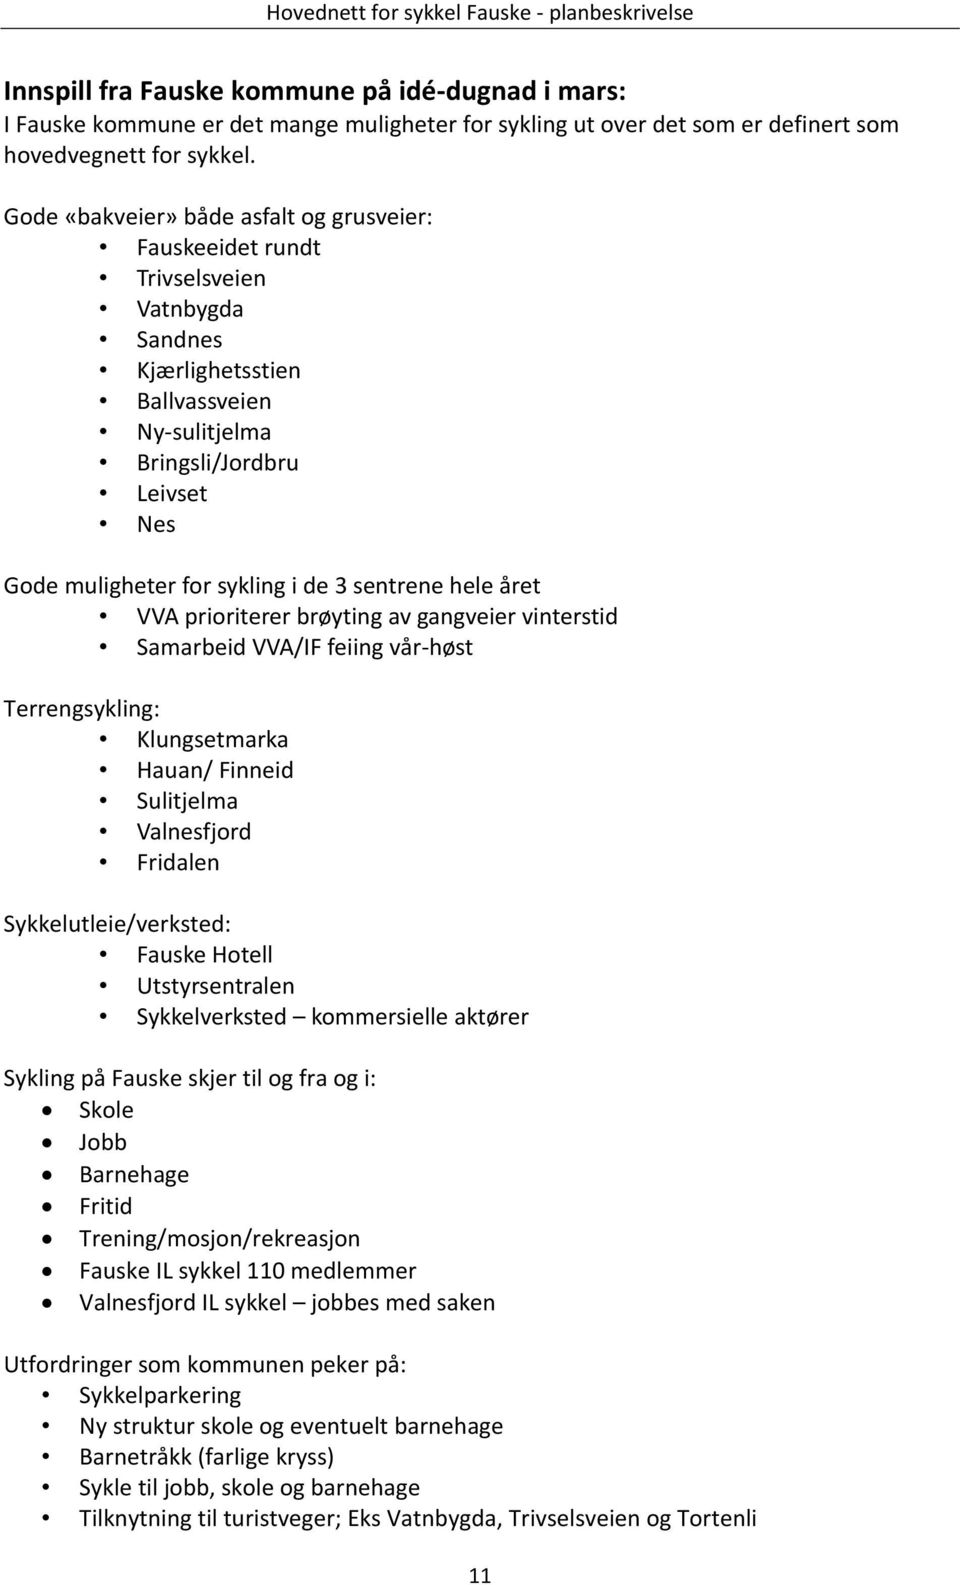 Hovednett for sykkel Fauske planbeskrivelse - PDF Free Download